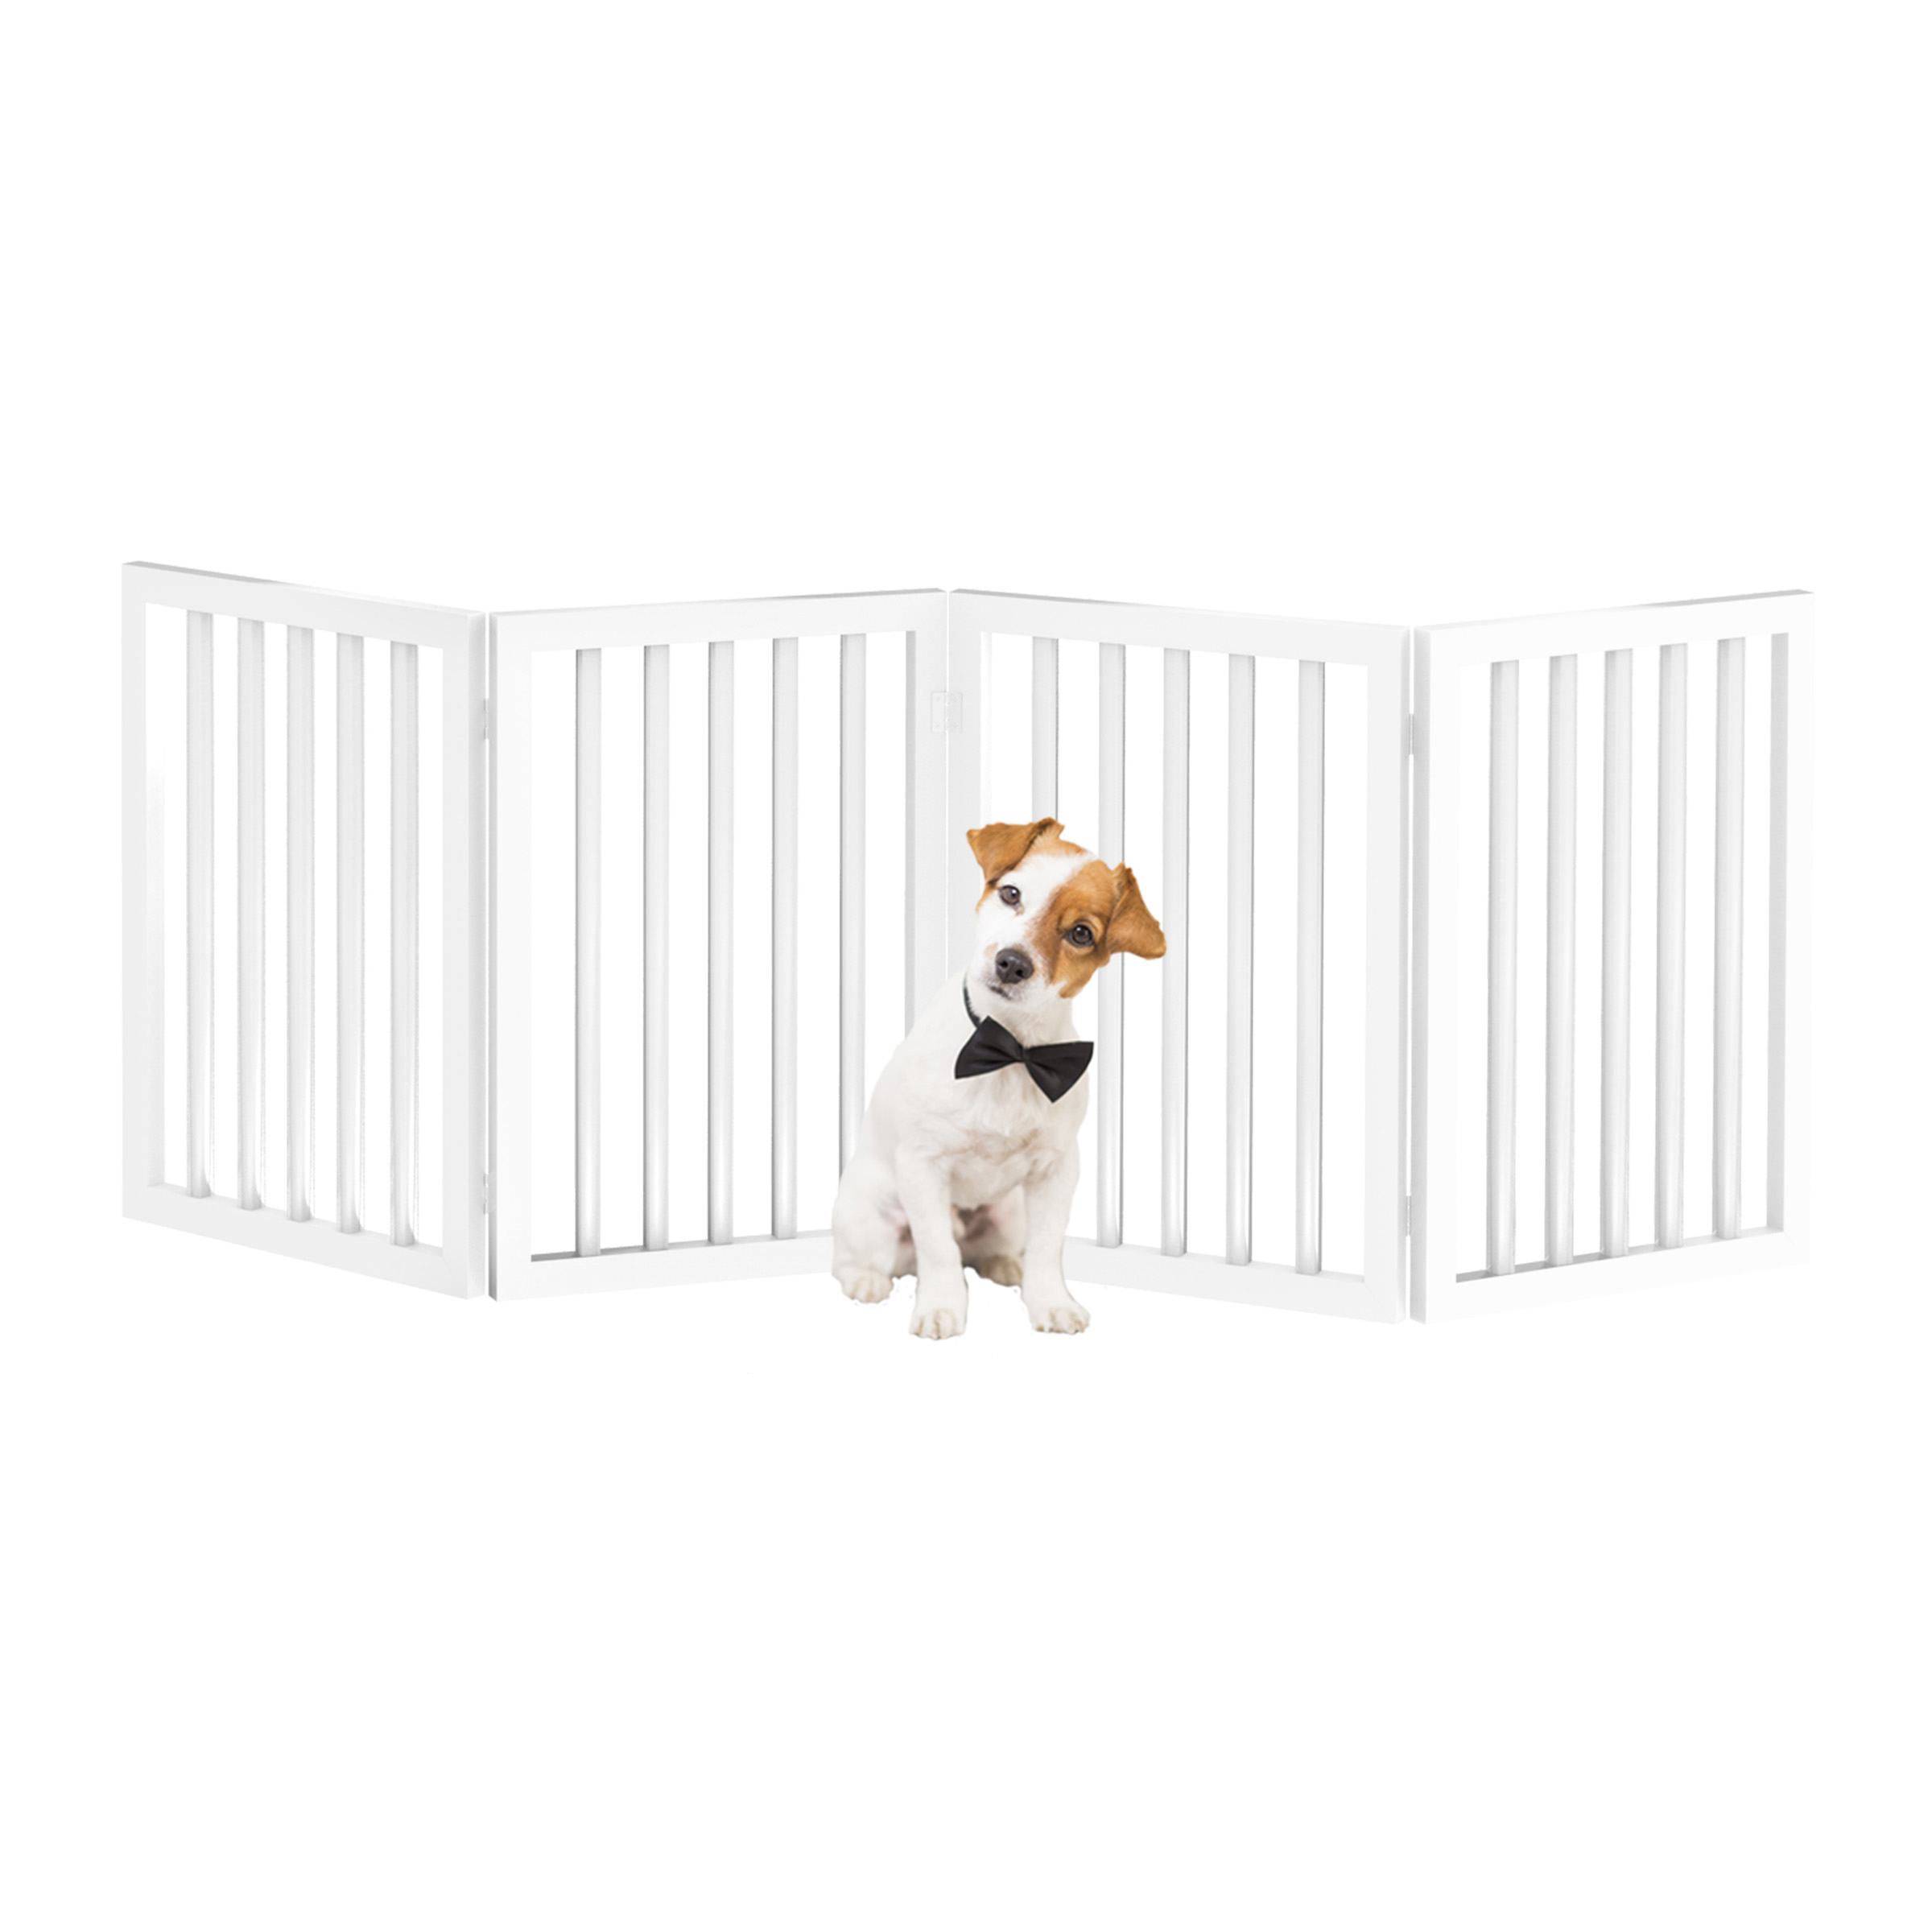 Freestanding Pet Gate Room Barrier For Dogs Wooden Indoor Folding Fence For Doorways 4 Panel - Gray